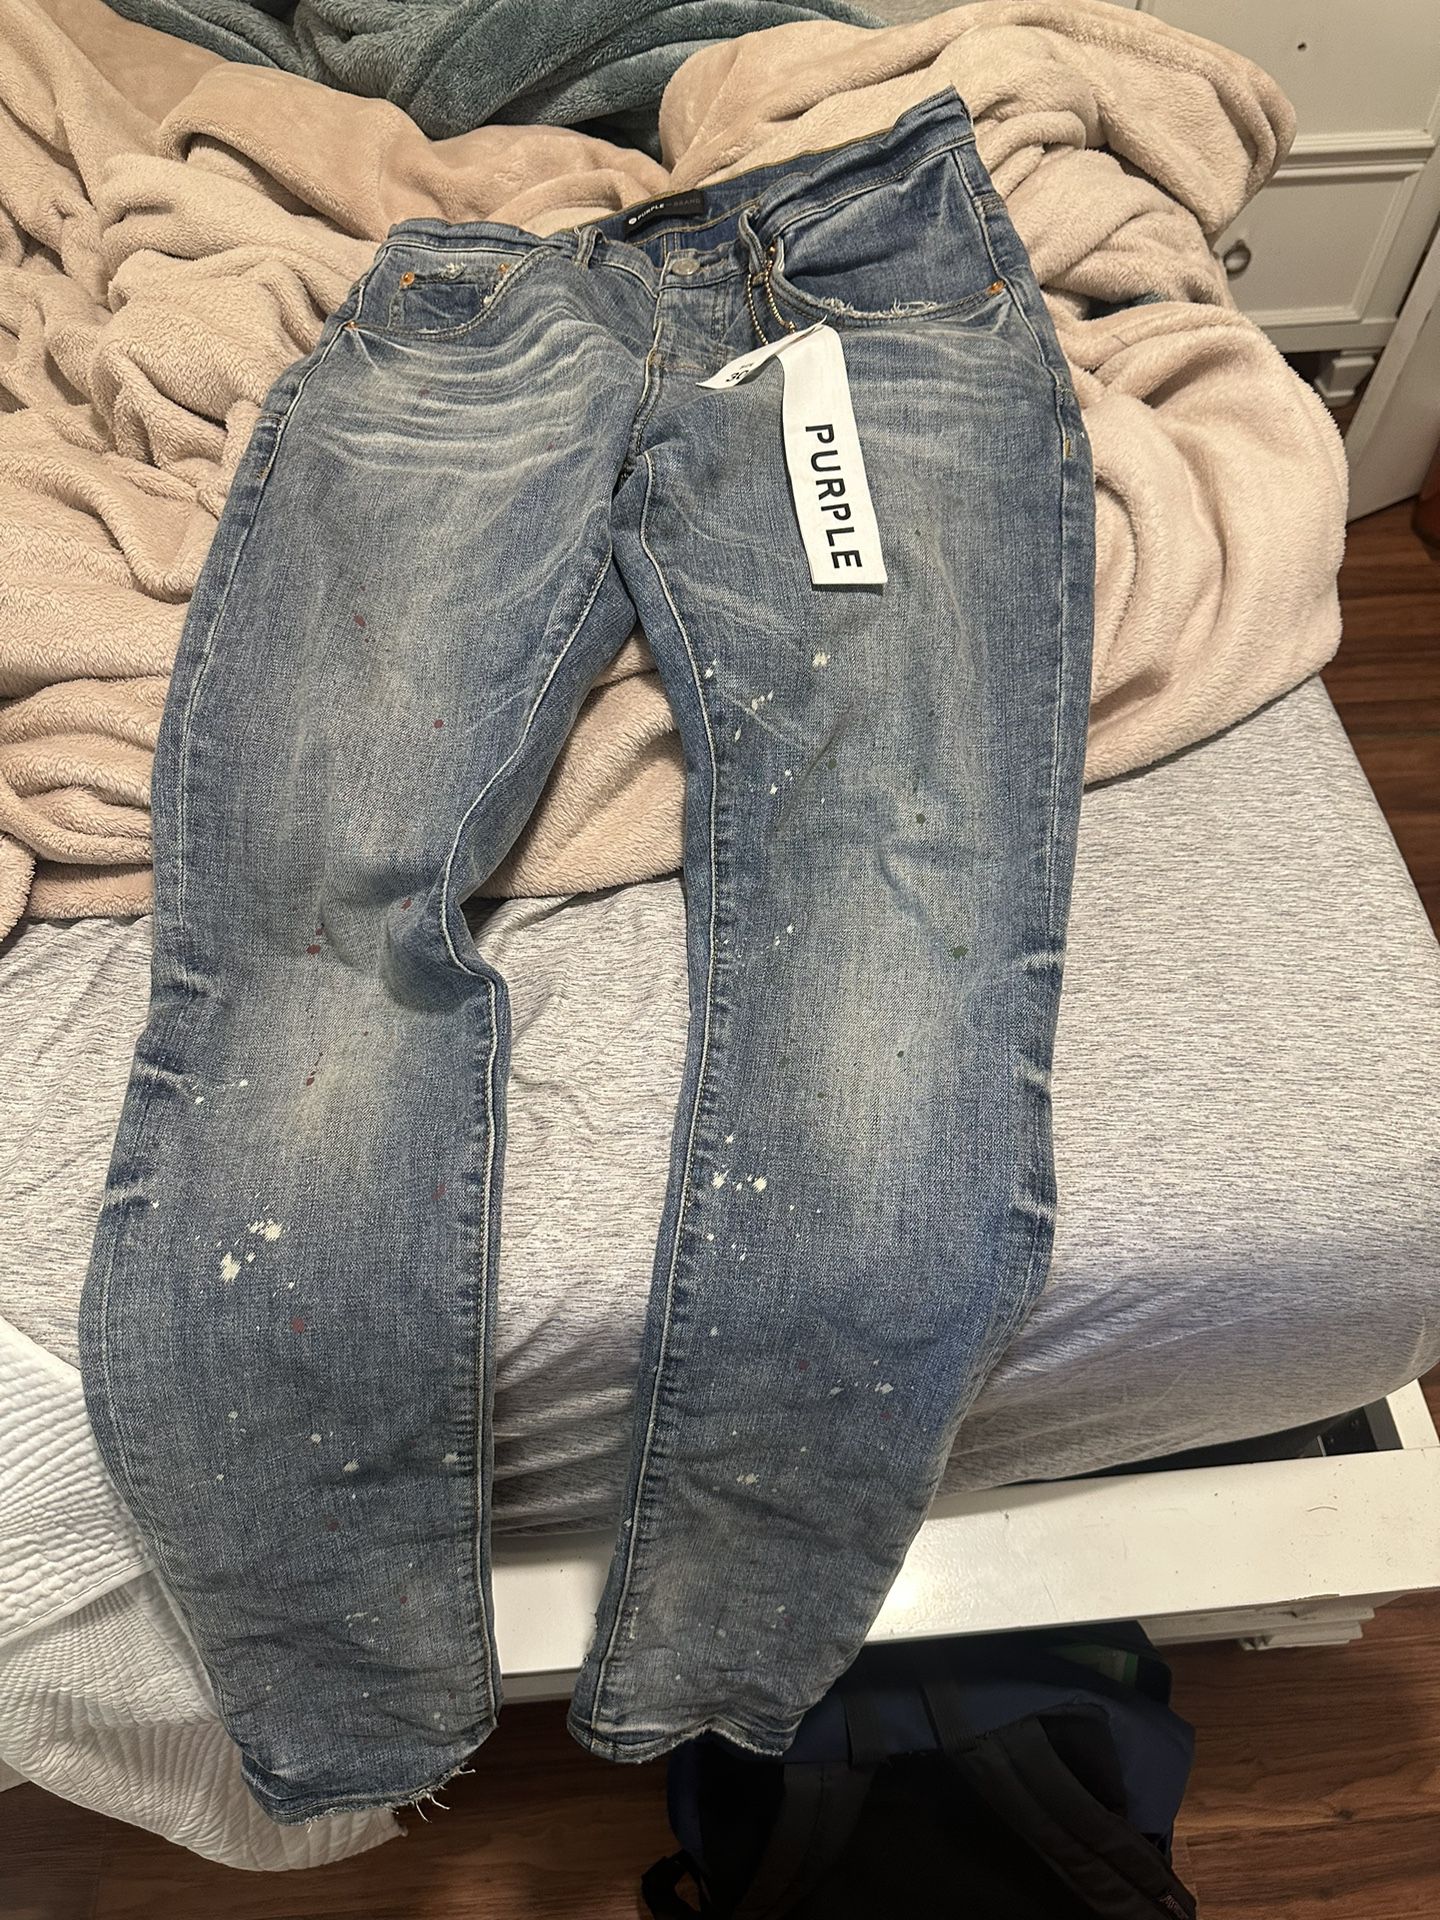 purple jeans for 100 sum 1 please buy them